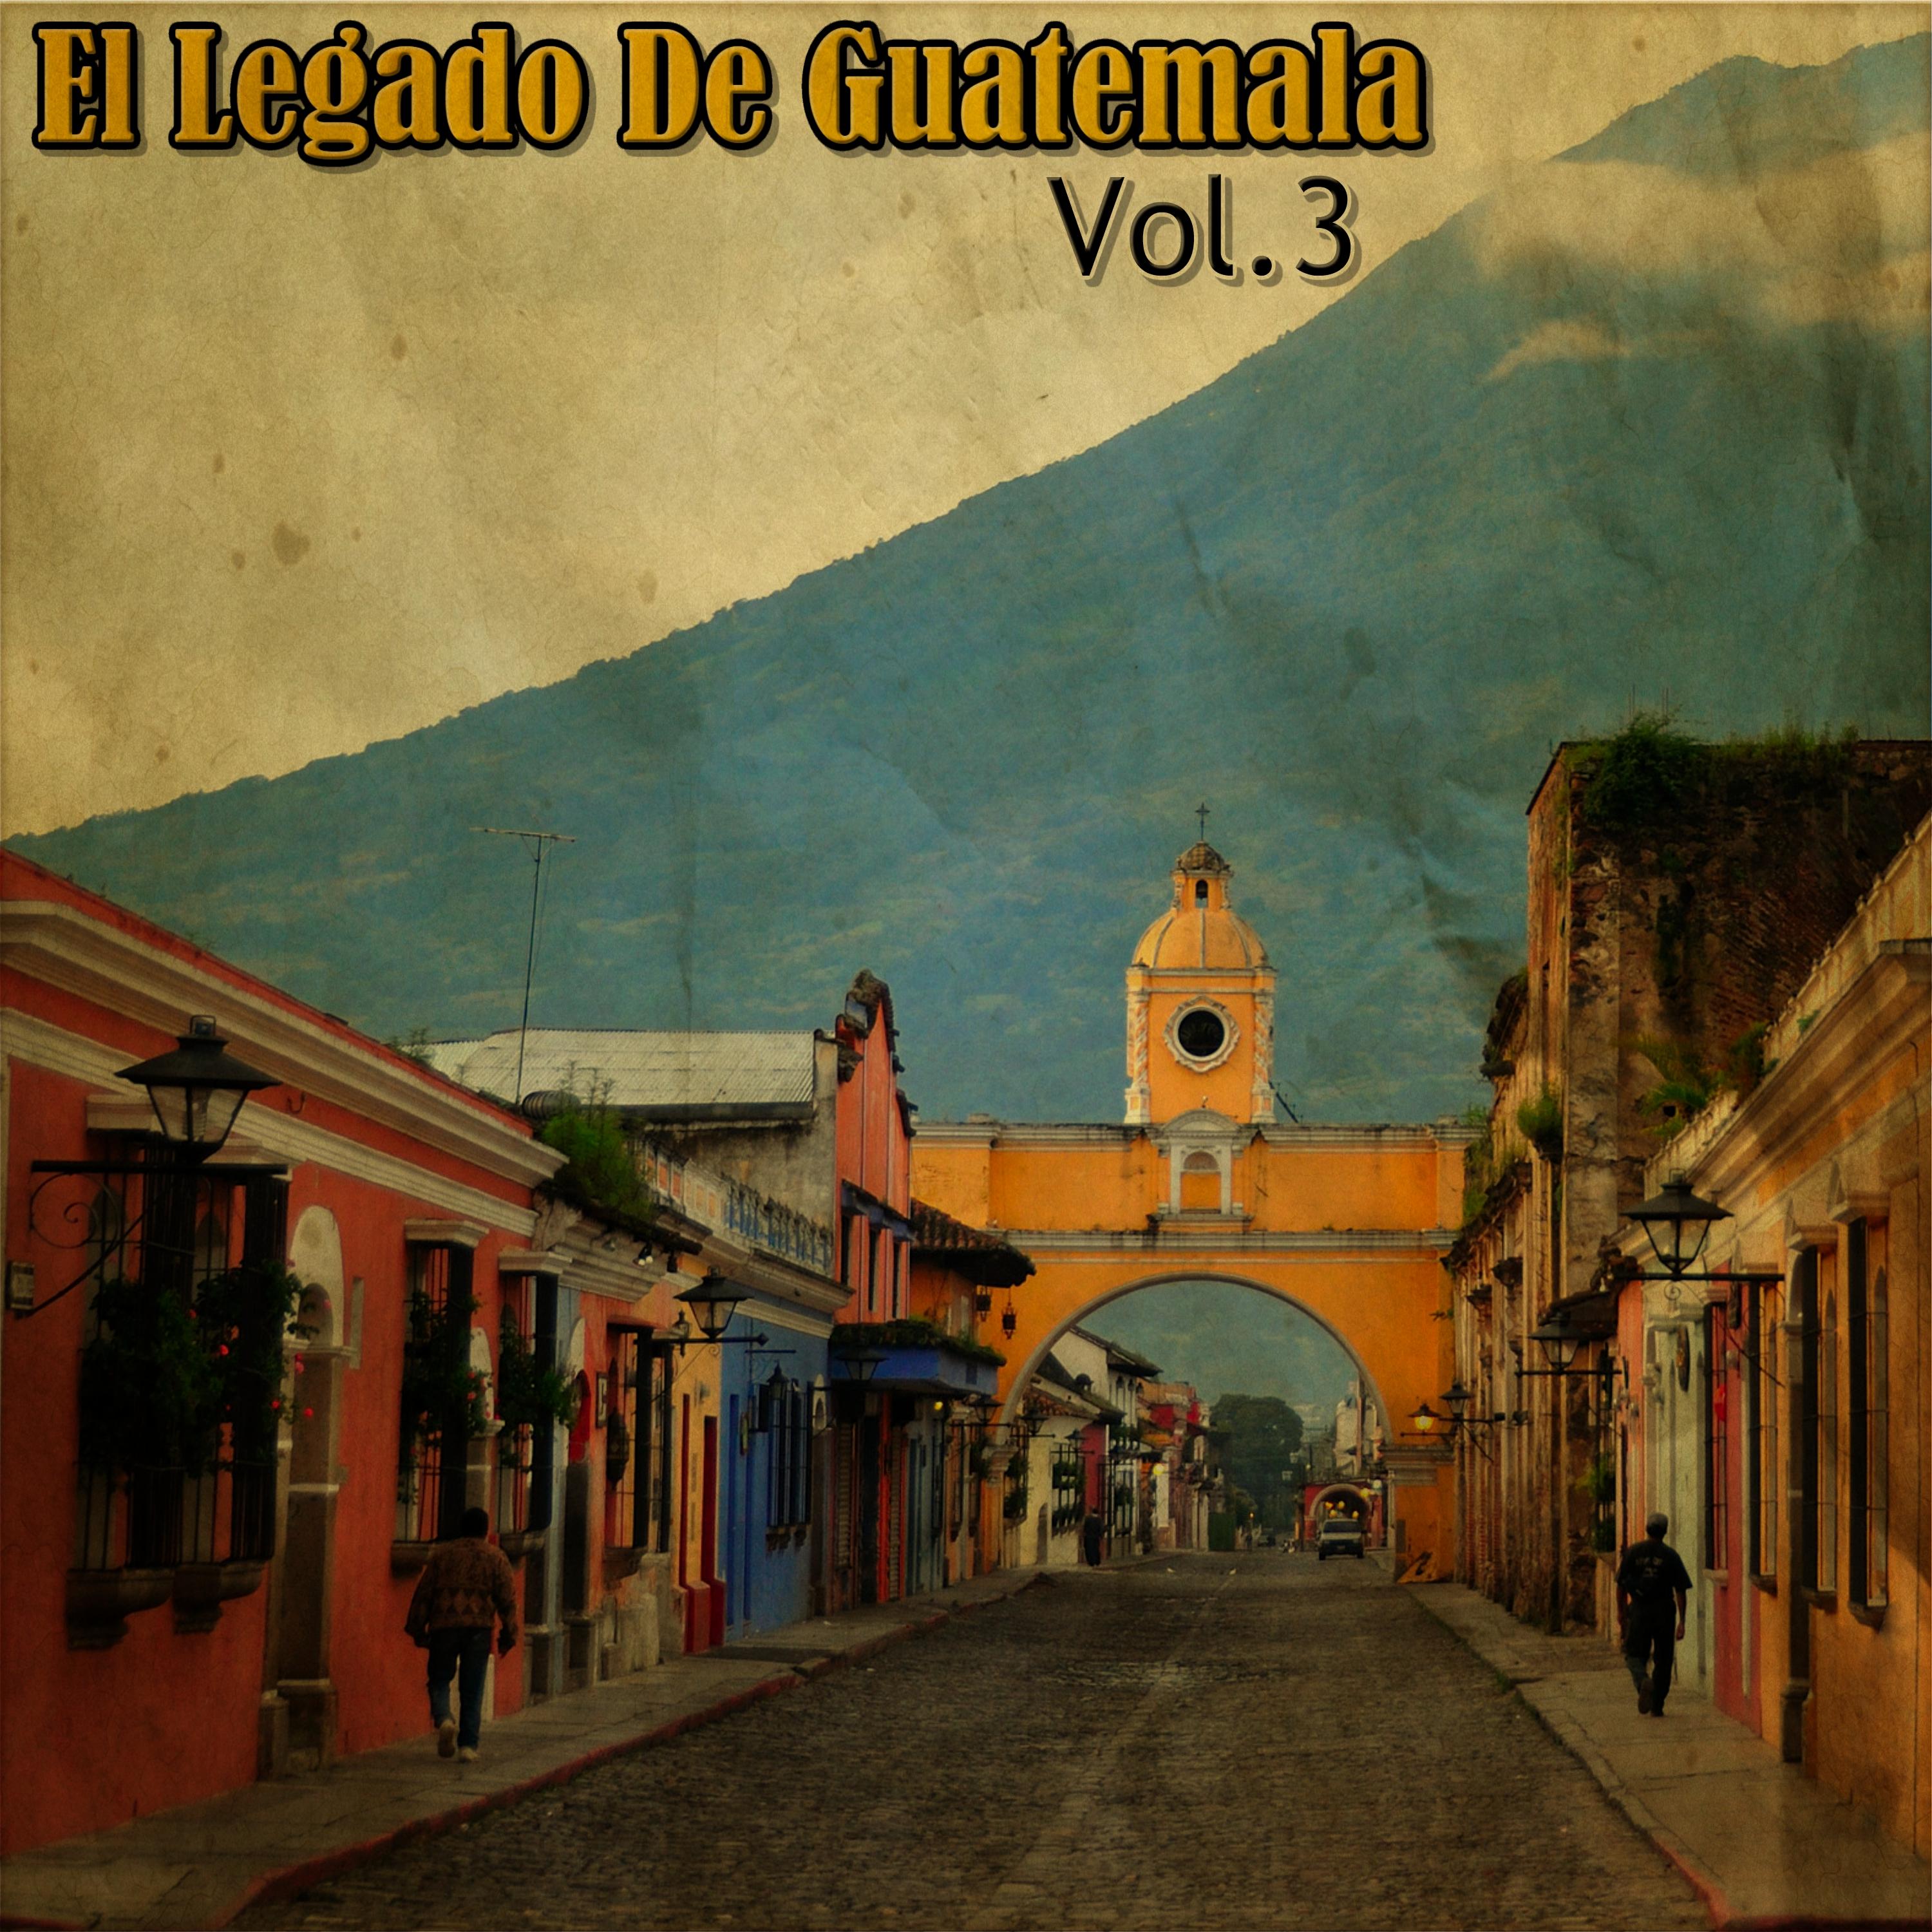 El Legado de Guatemala, Vol.3